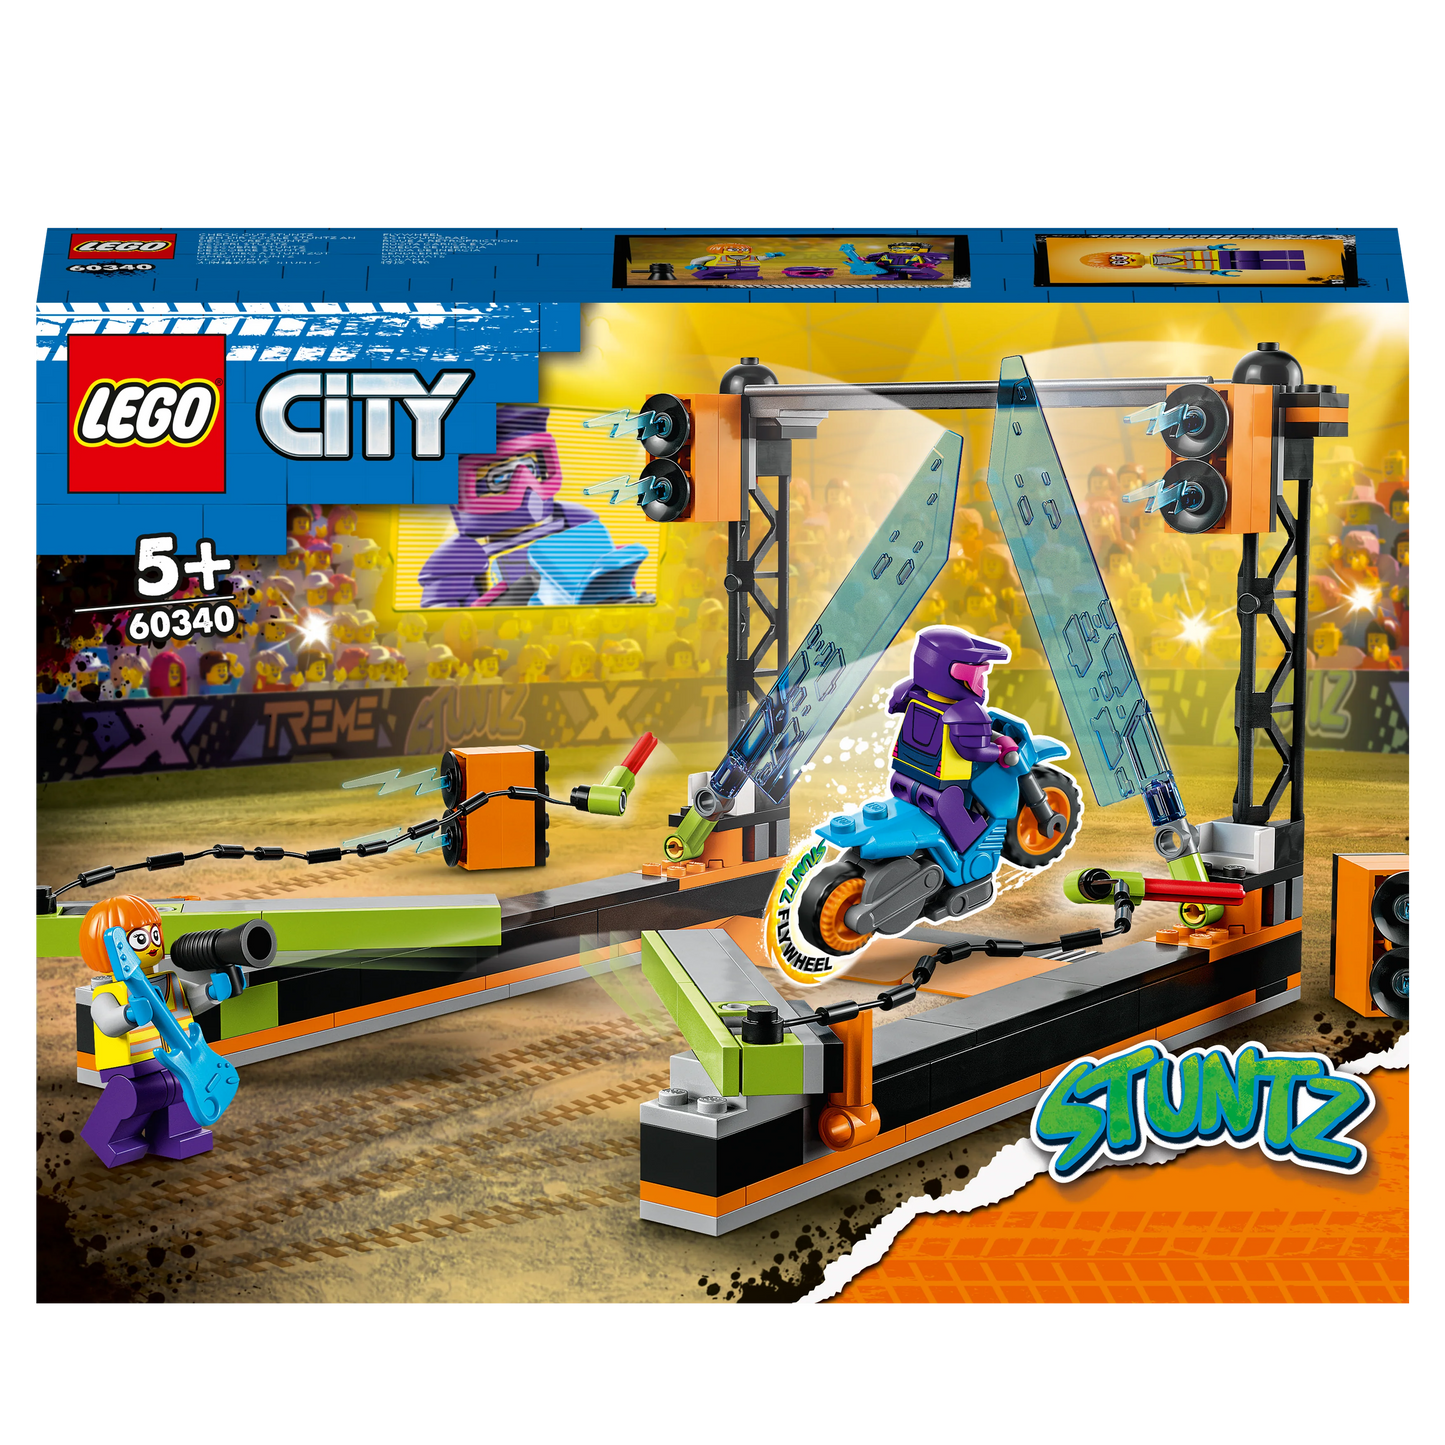 Het mes stuntuitdaging-LEGO City